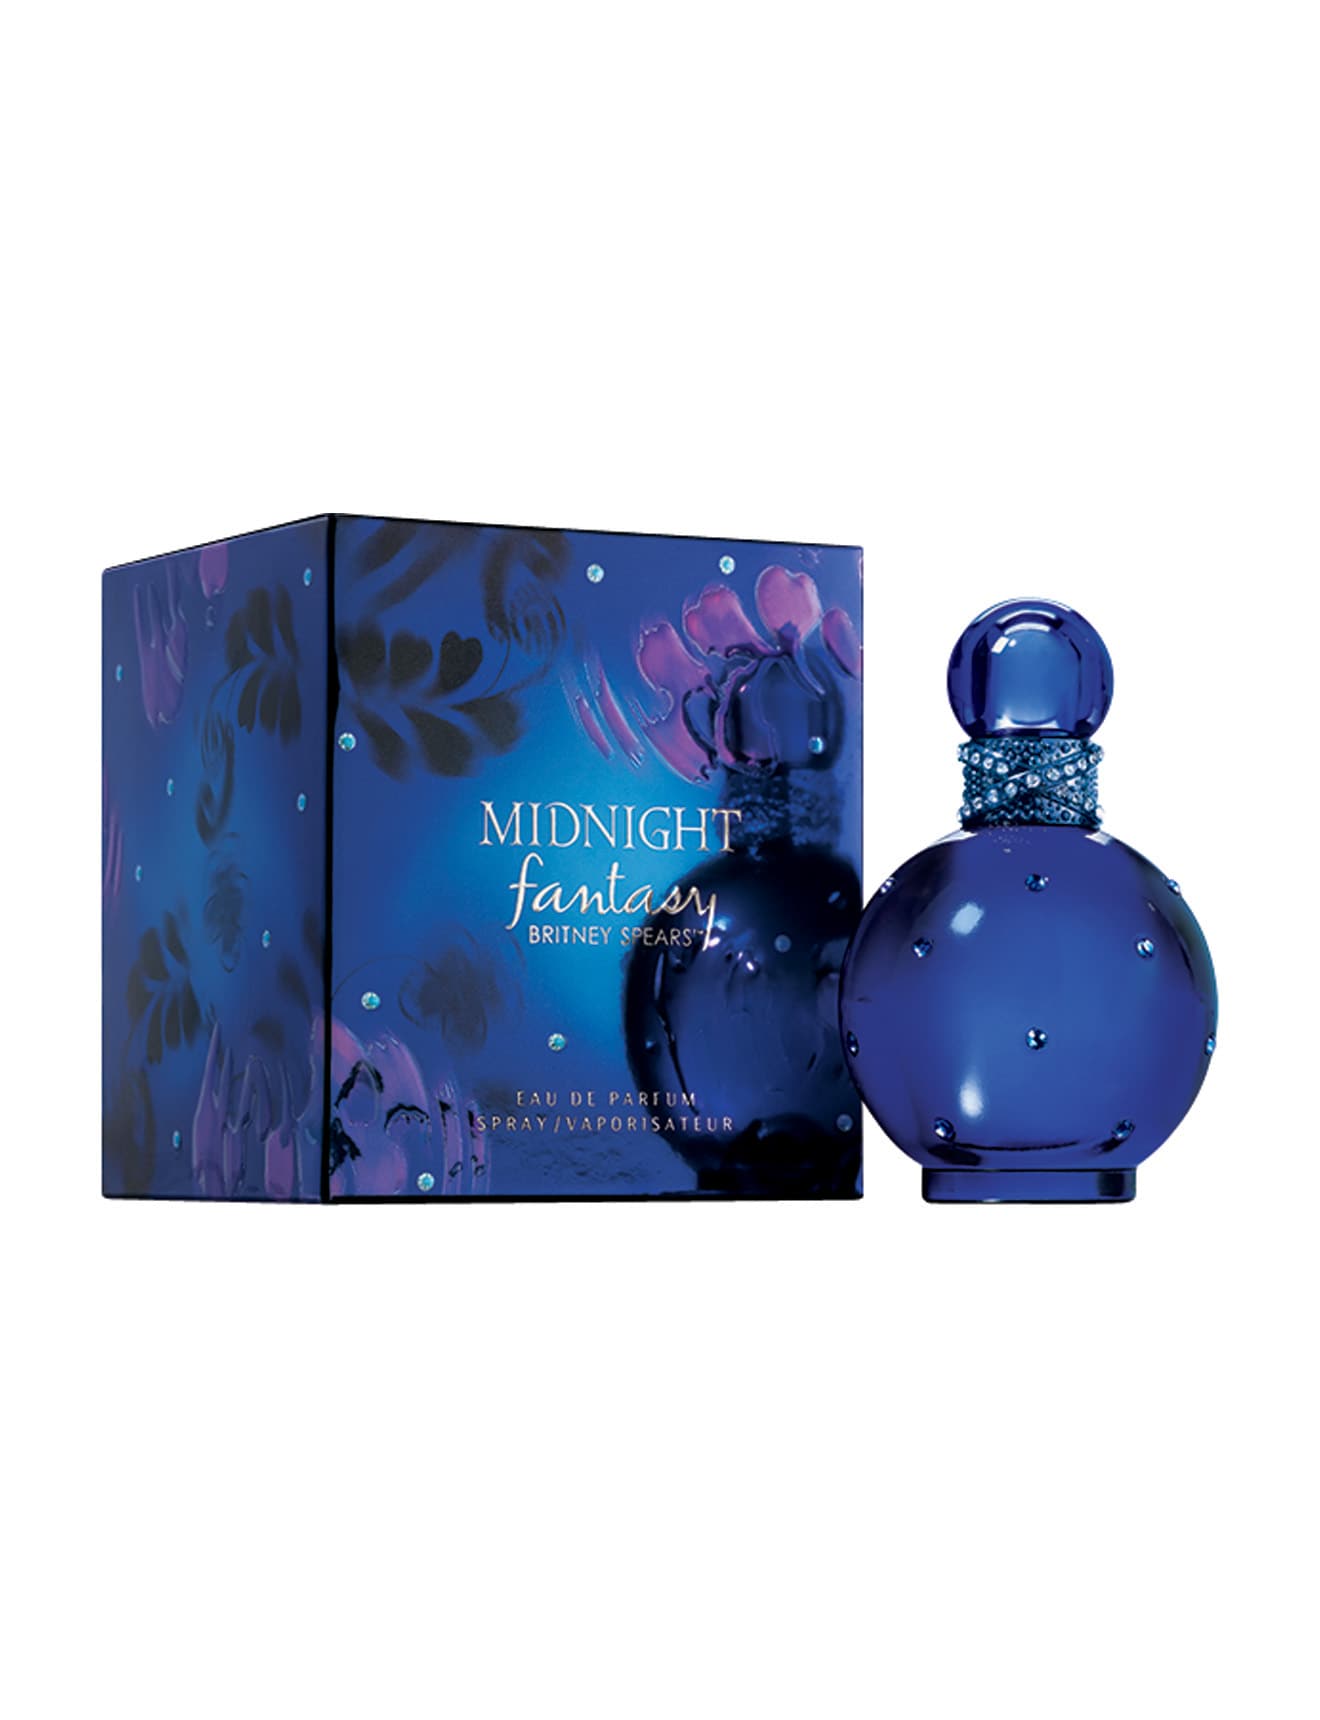 Britney Spears Midnight Fantasy EDP product photo